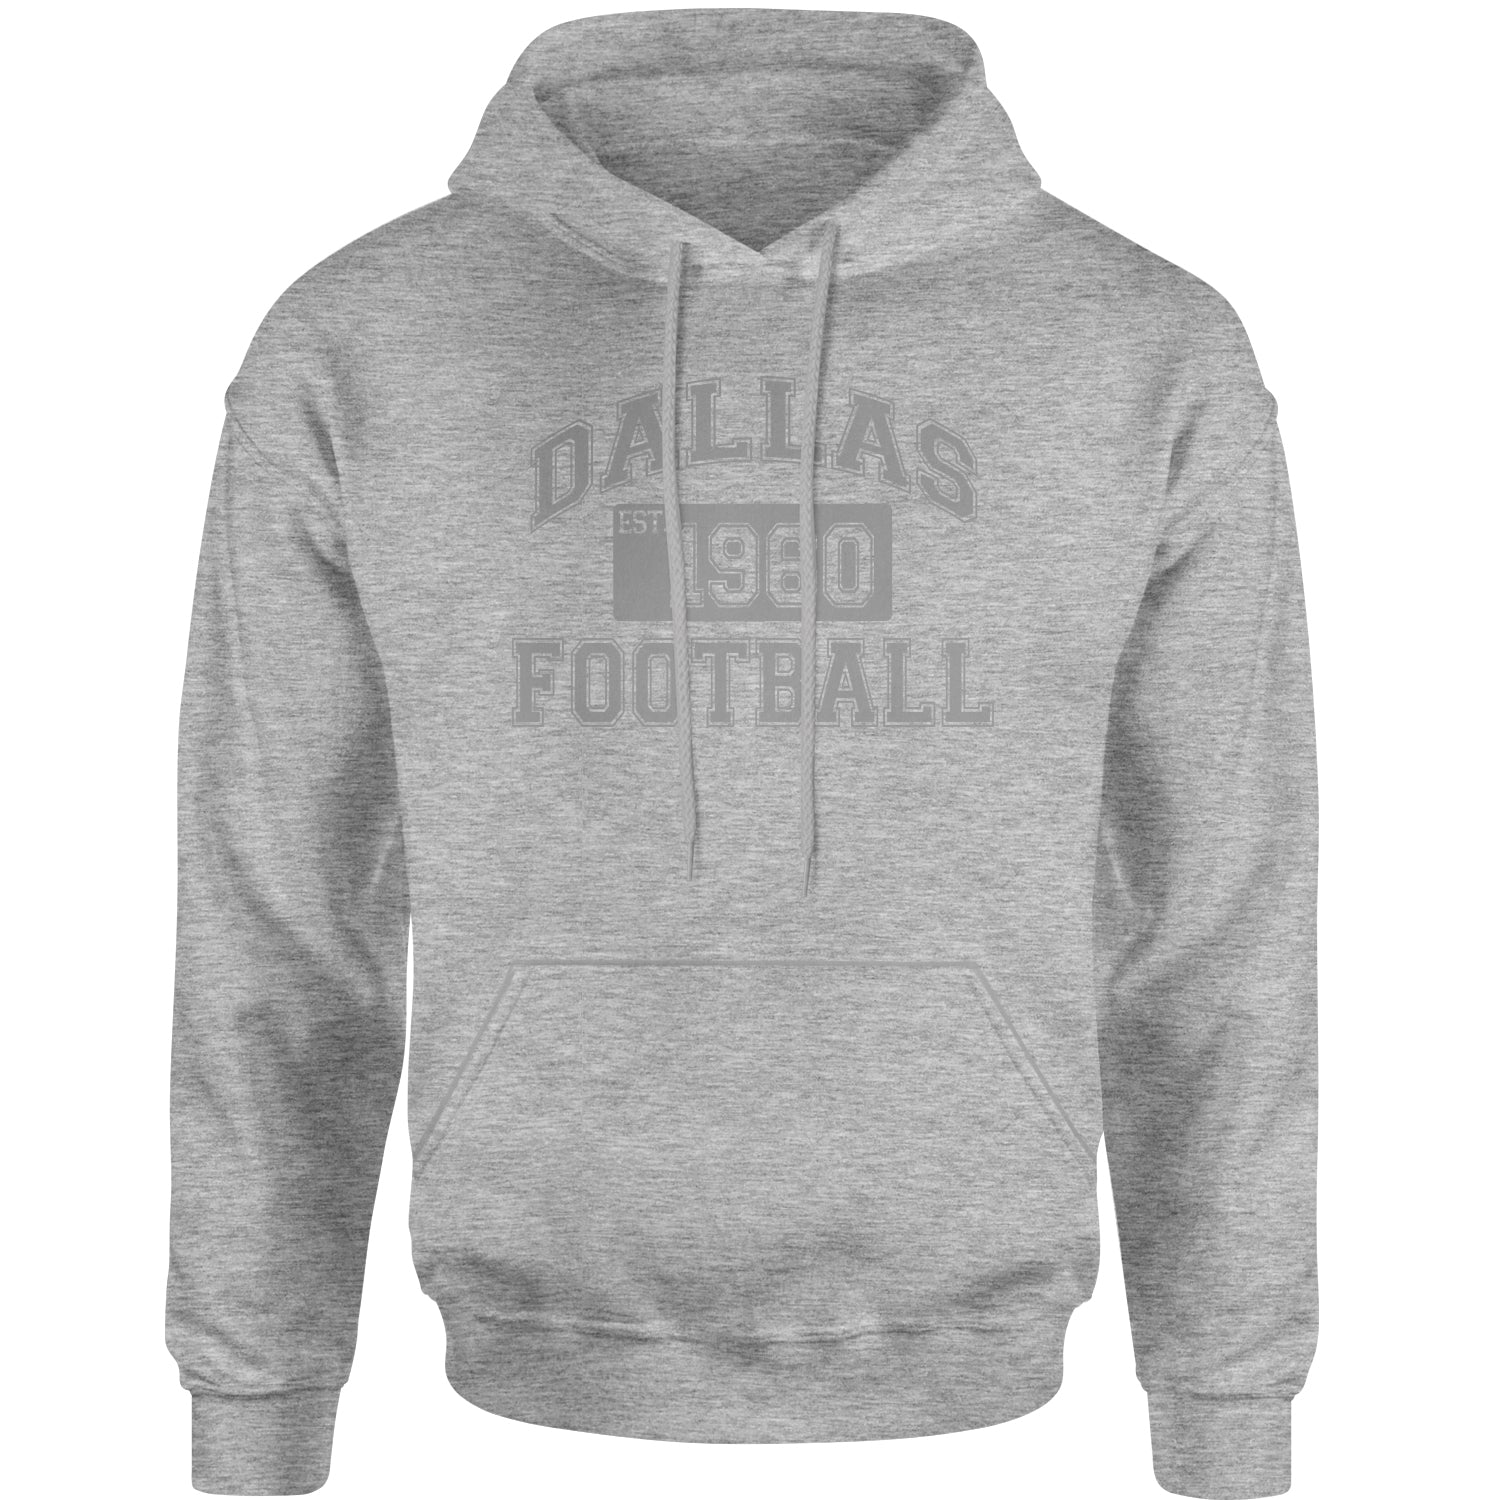 Dallas Football Established 1960 Adult Hoodie Sweatshirt boys, dem by Expression Tees